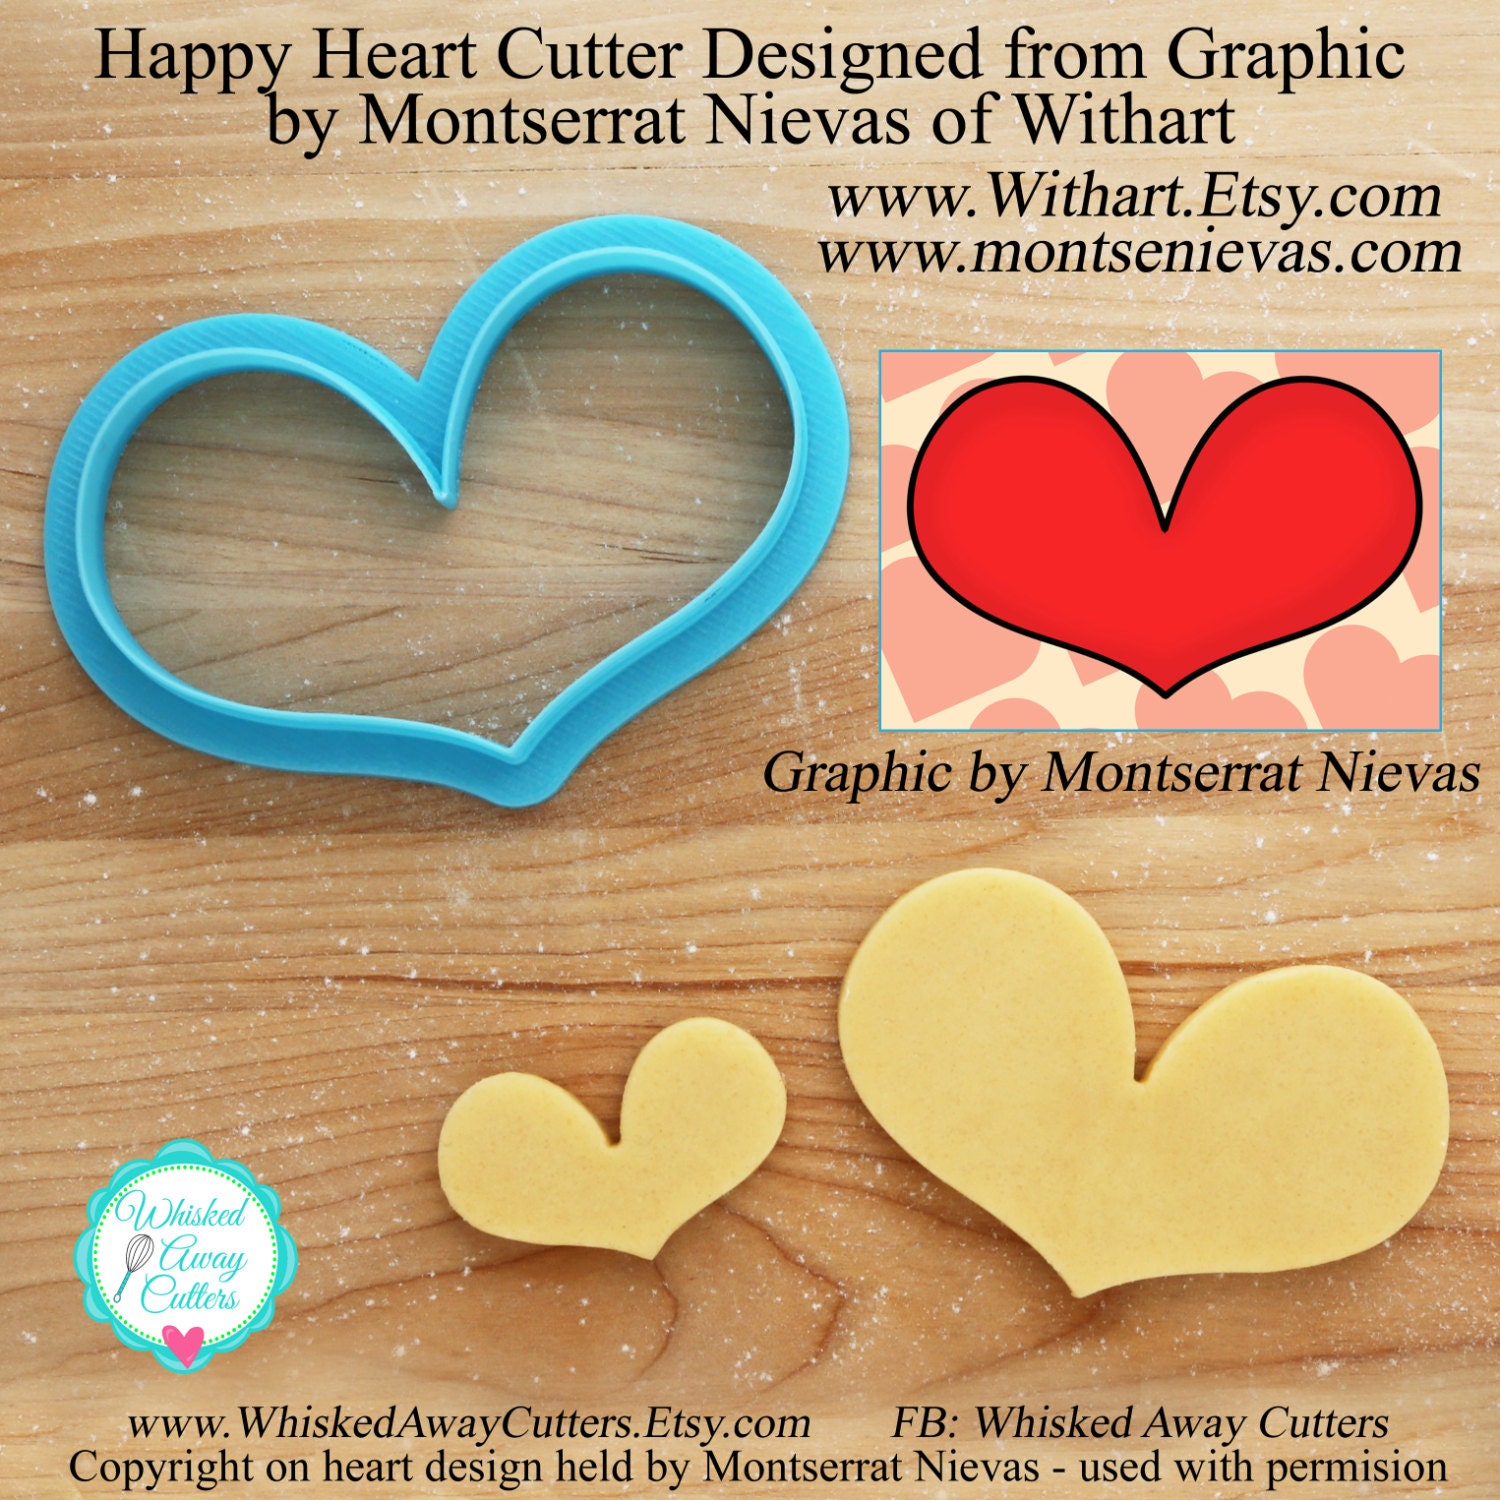 Happy Heart Cookie Cutter and Fondant Cutter by Artist Montserrat Nievas